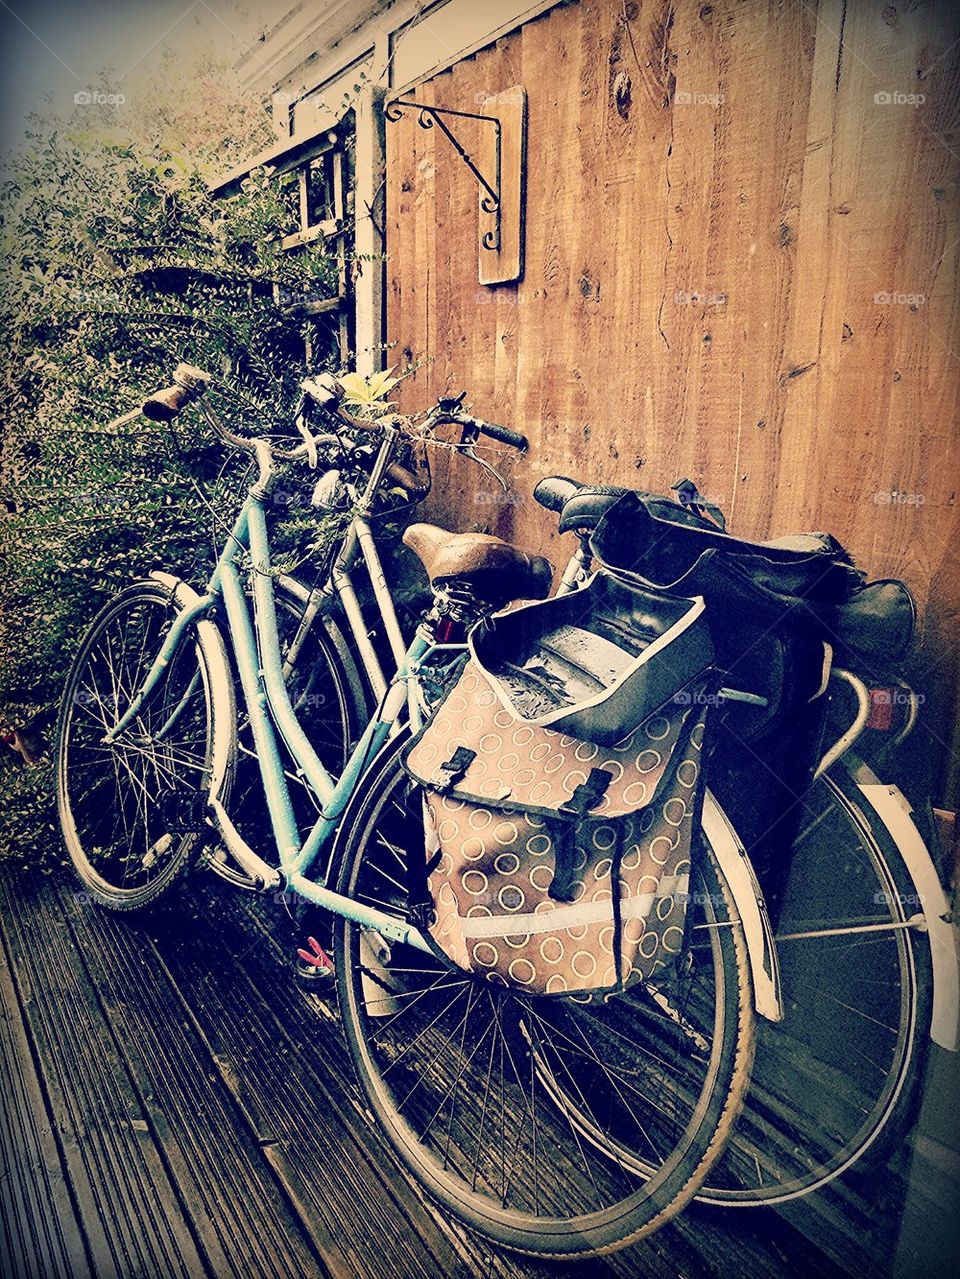 bike yard